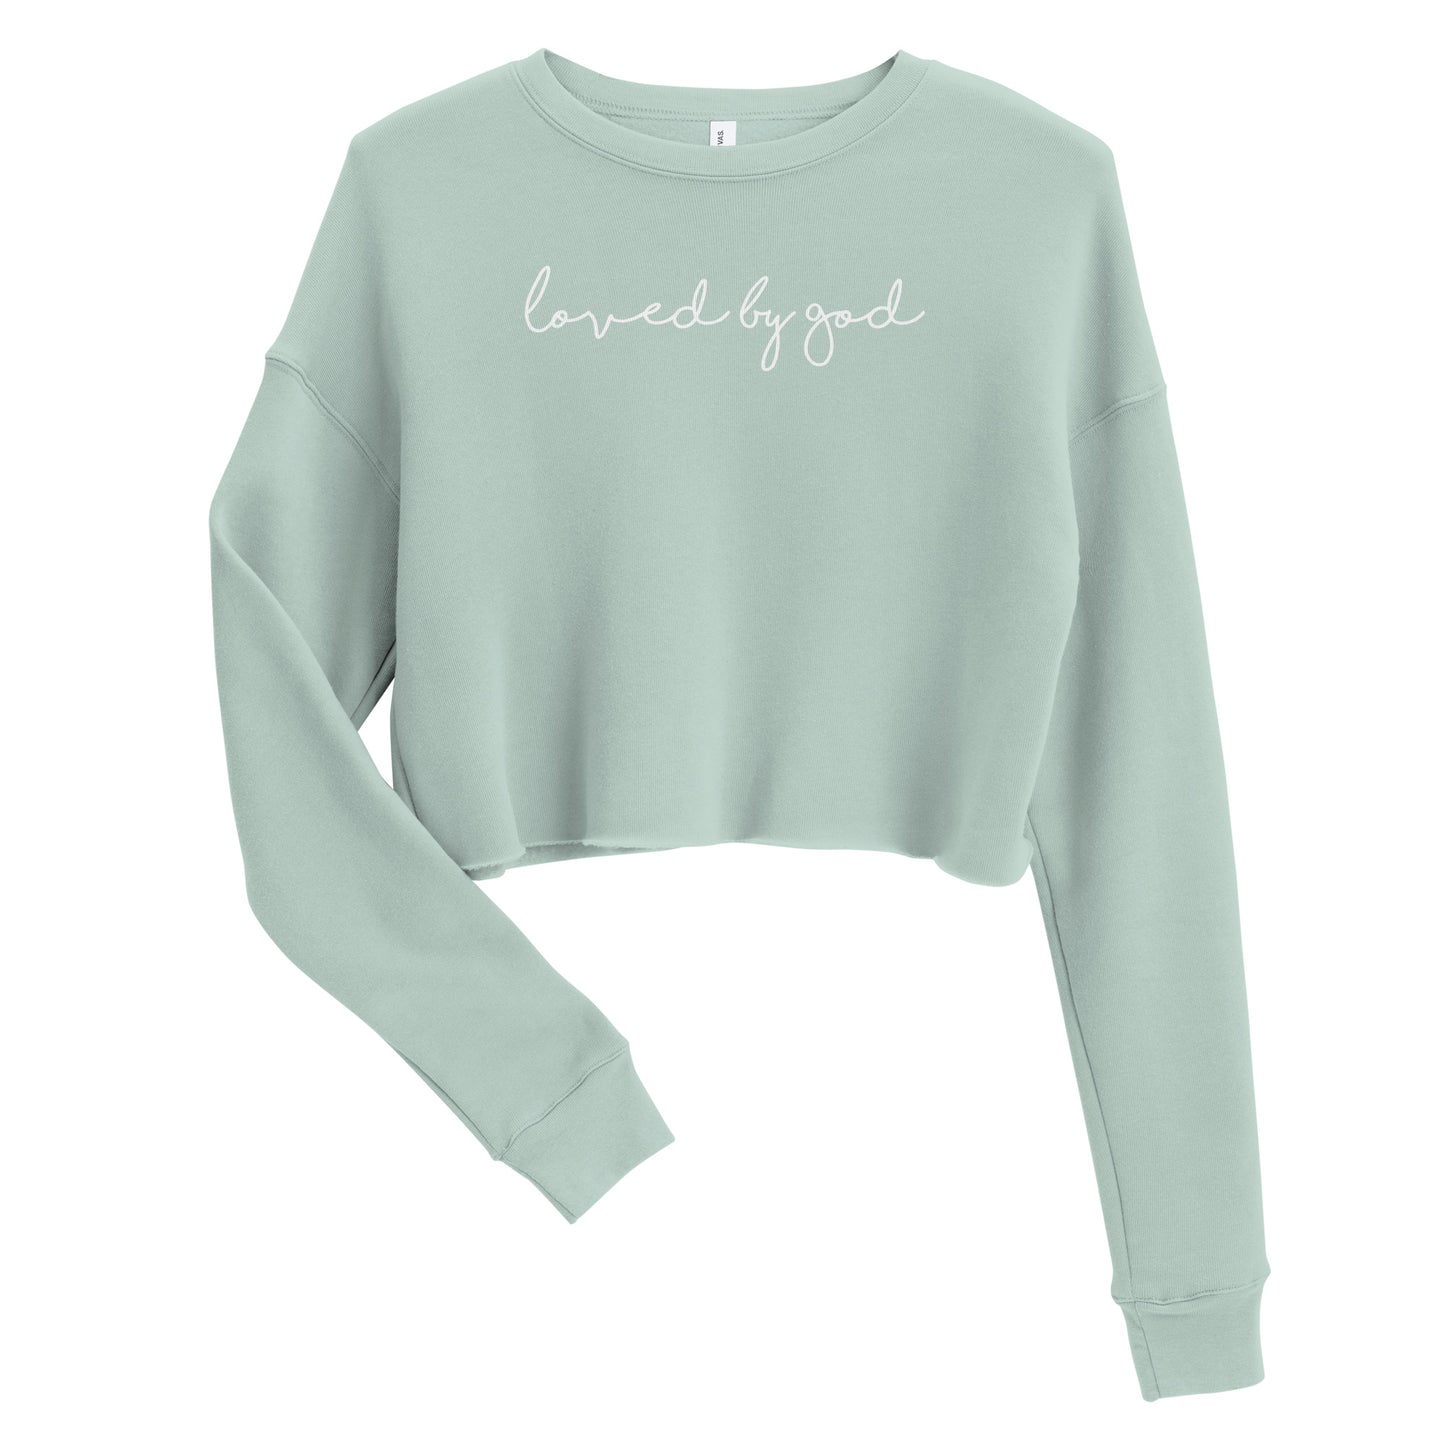 Christian Sweatshirt | Loved By God | Christian Apparel for Women | Crop Sweatshirt